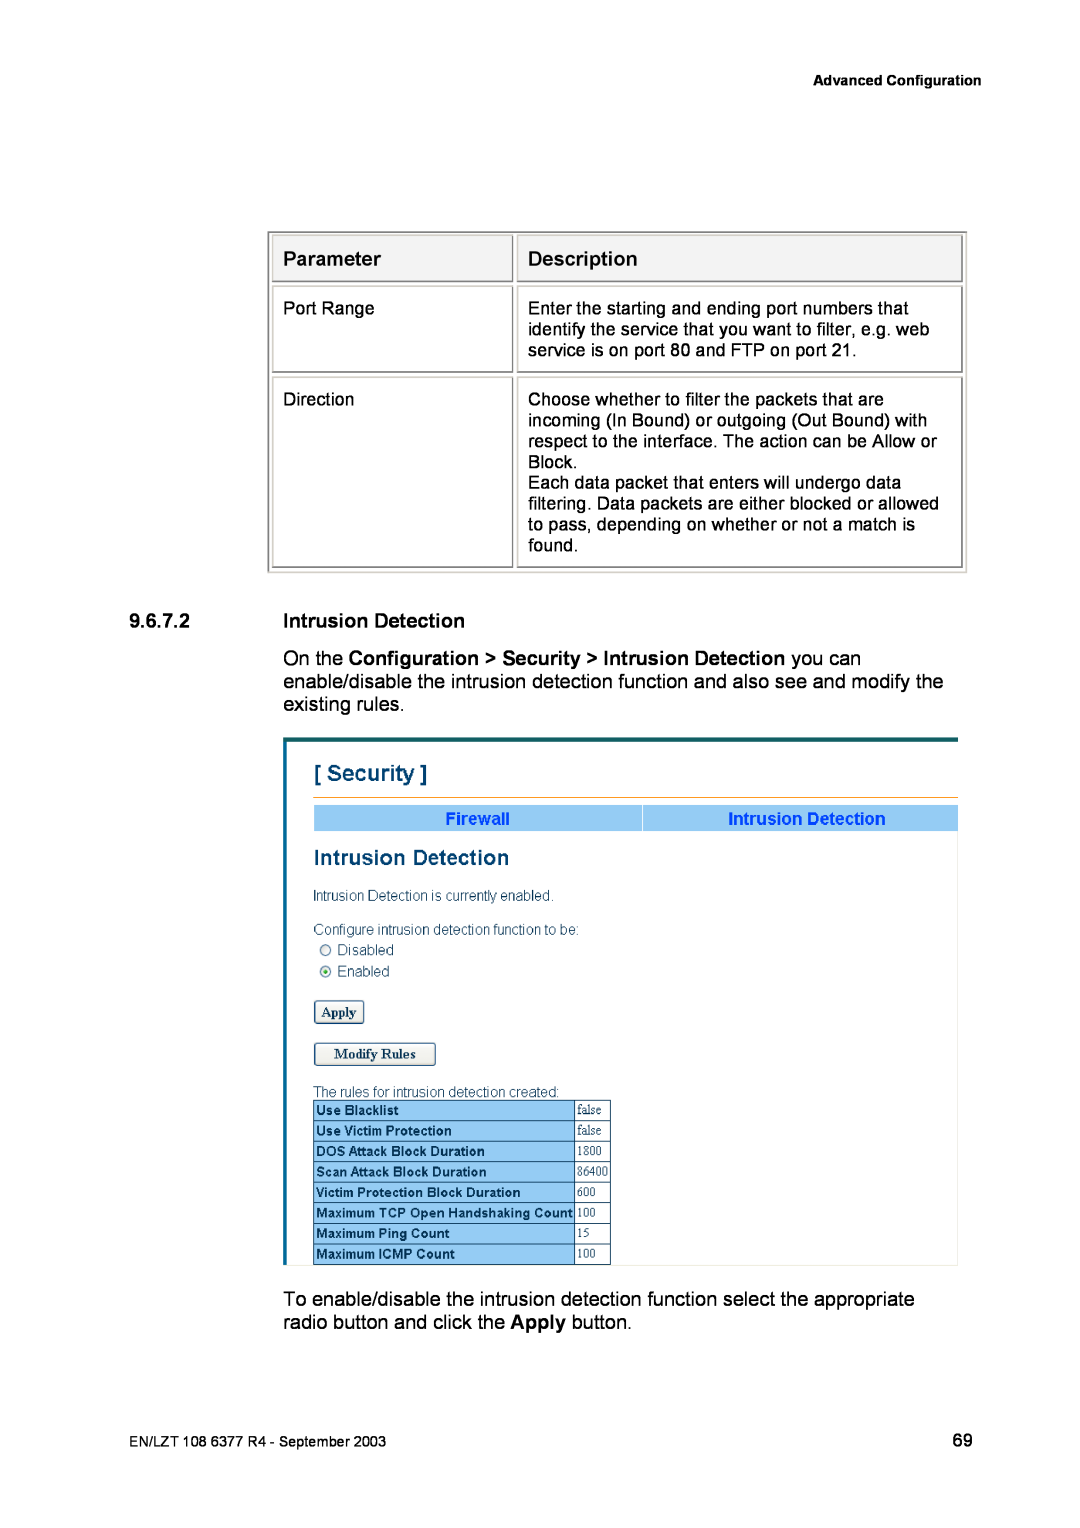 Garmin HN294DP/DI manual Parameter, Description, Intrusion Detection 